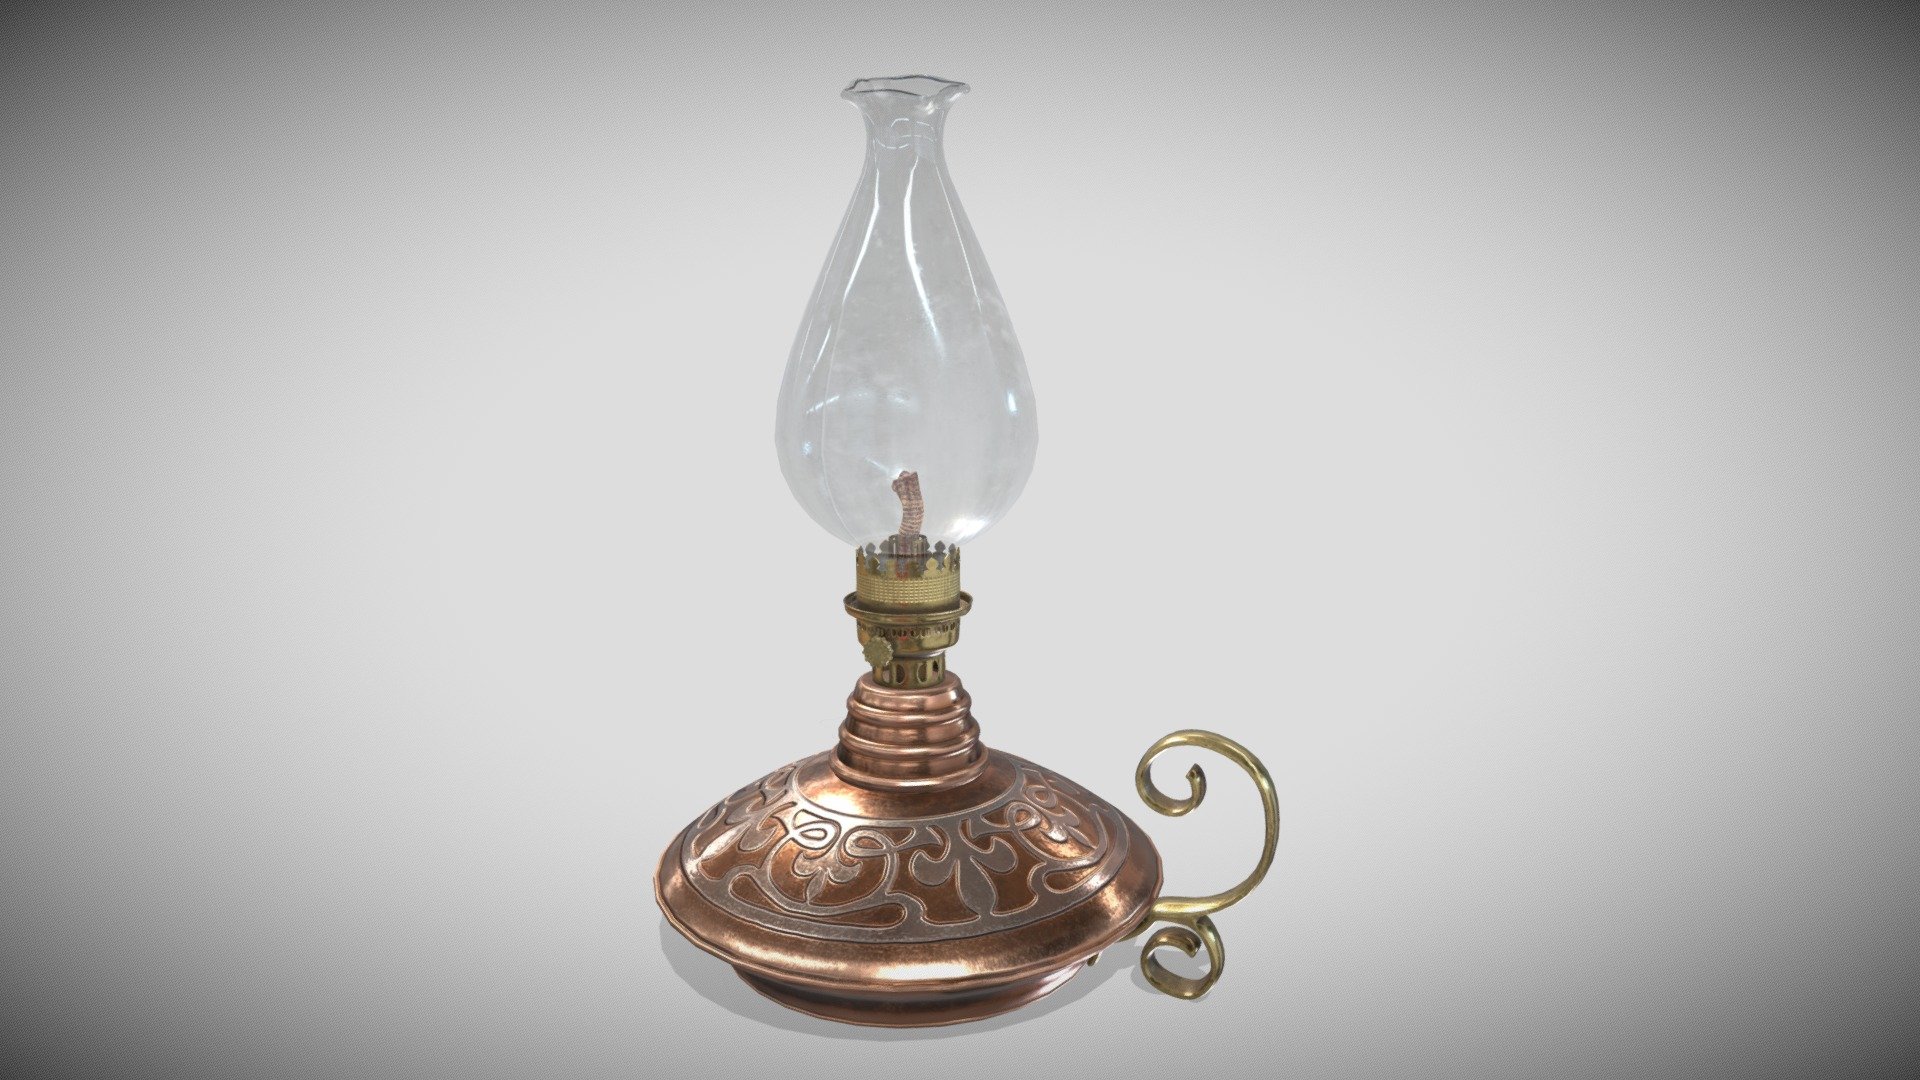 One Material PBR Metalness 2k (jpg) - Small Oil Lamp - Pikulamp - Buy Royalty Free 3D model by Francesco Coldesina (@topfrank2013) 3d model